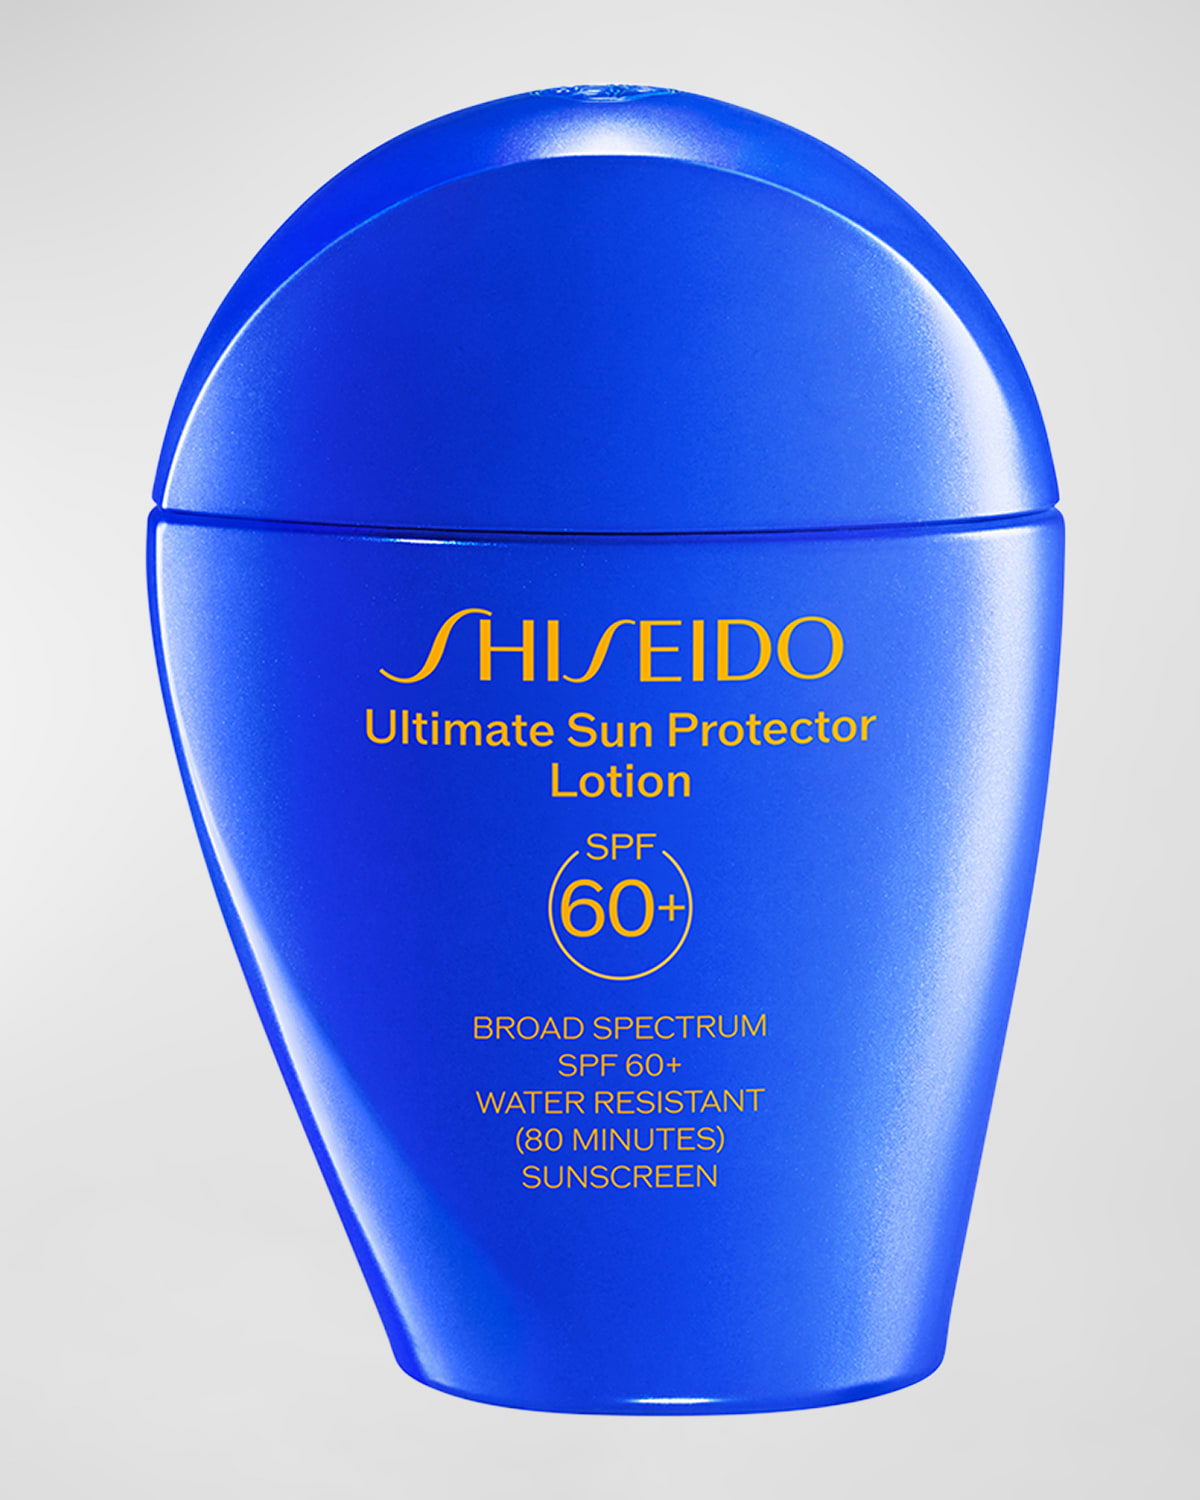 Ultimate Sun Protector Lotion SPF 60+, 1.7 oz.